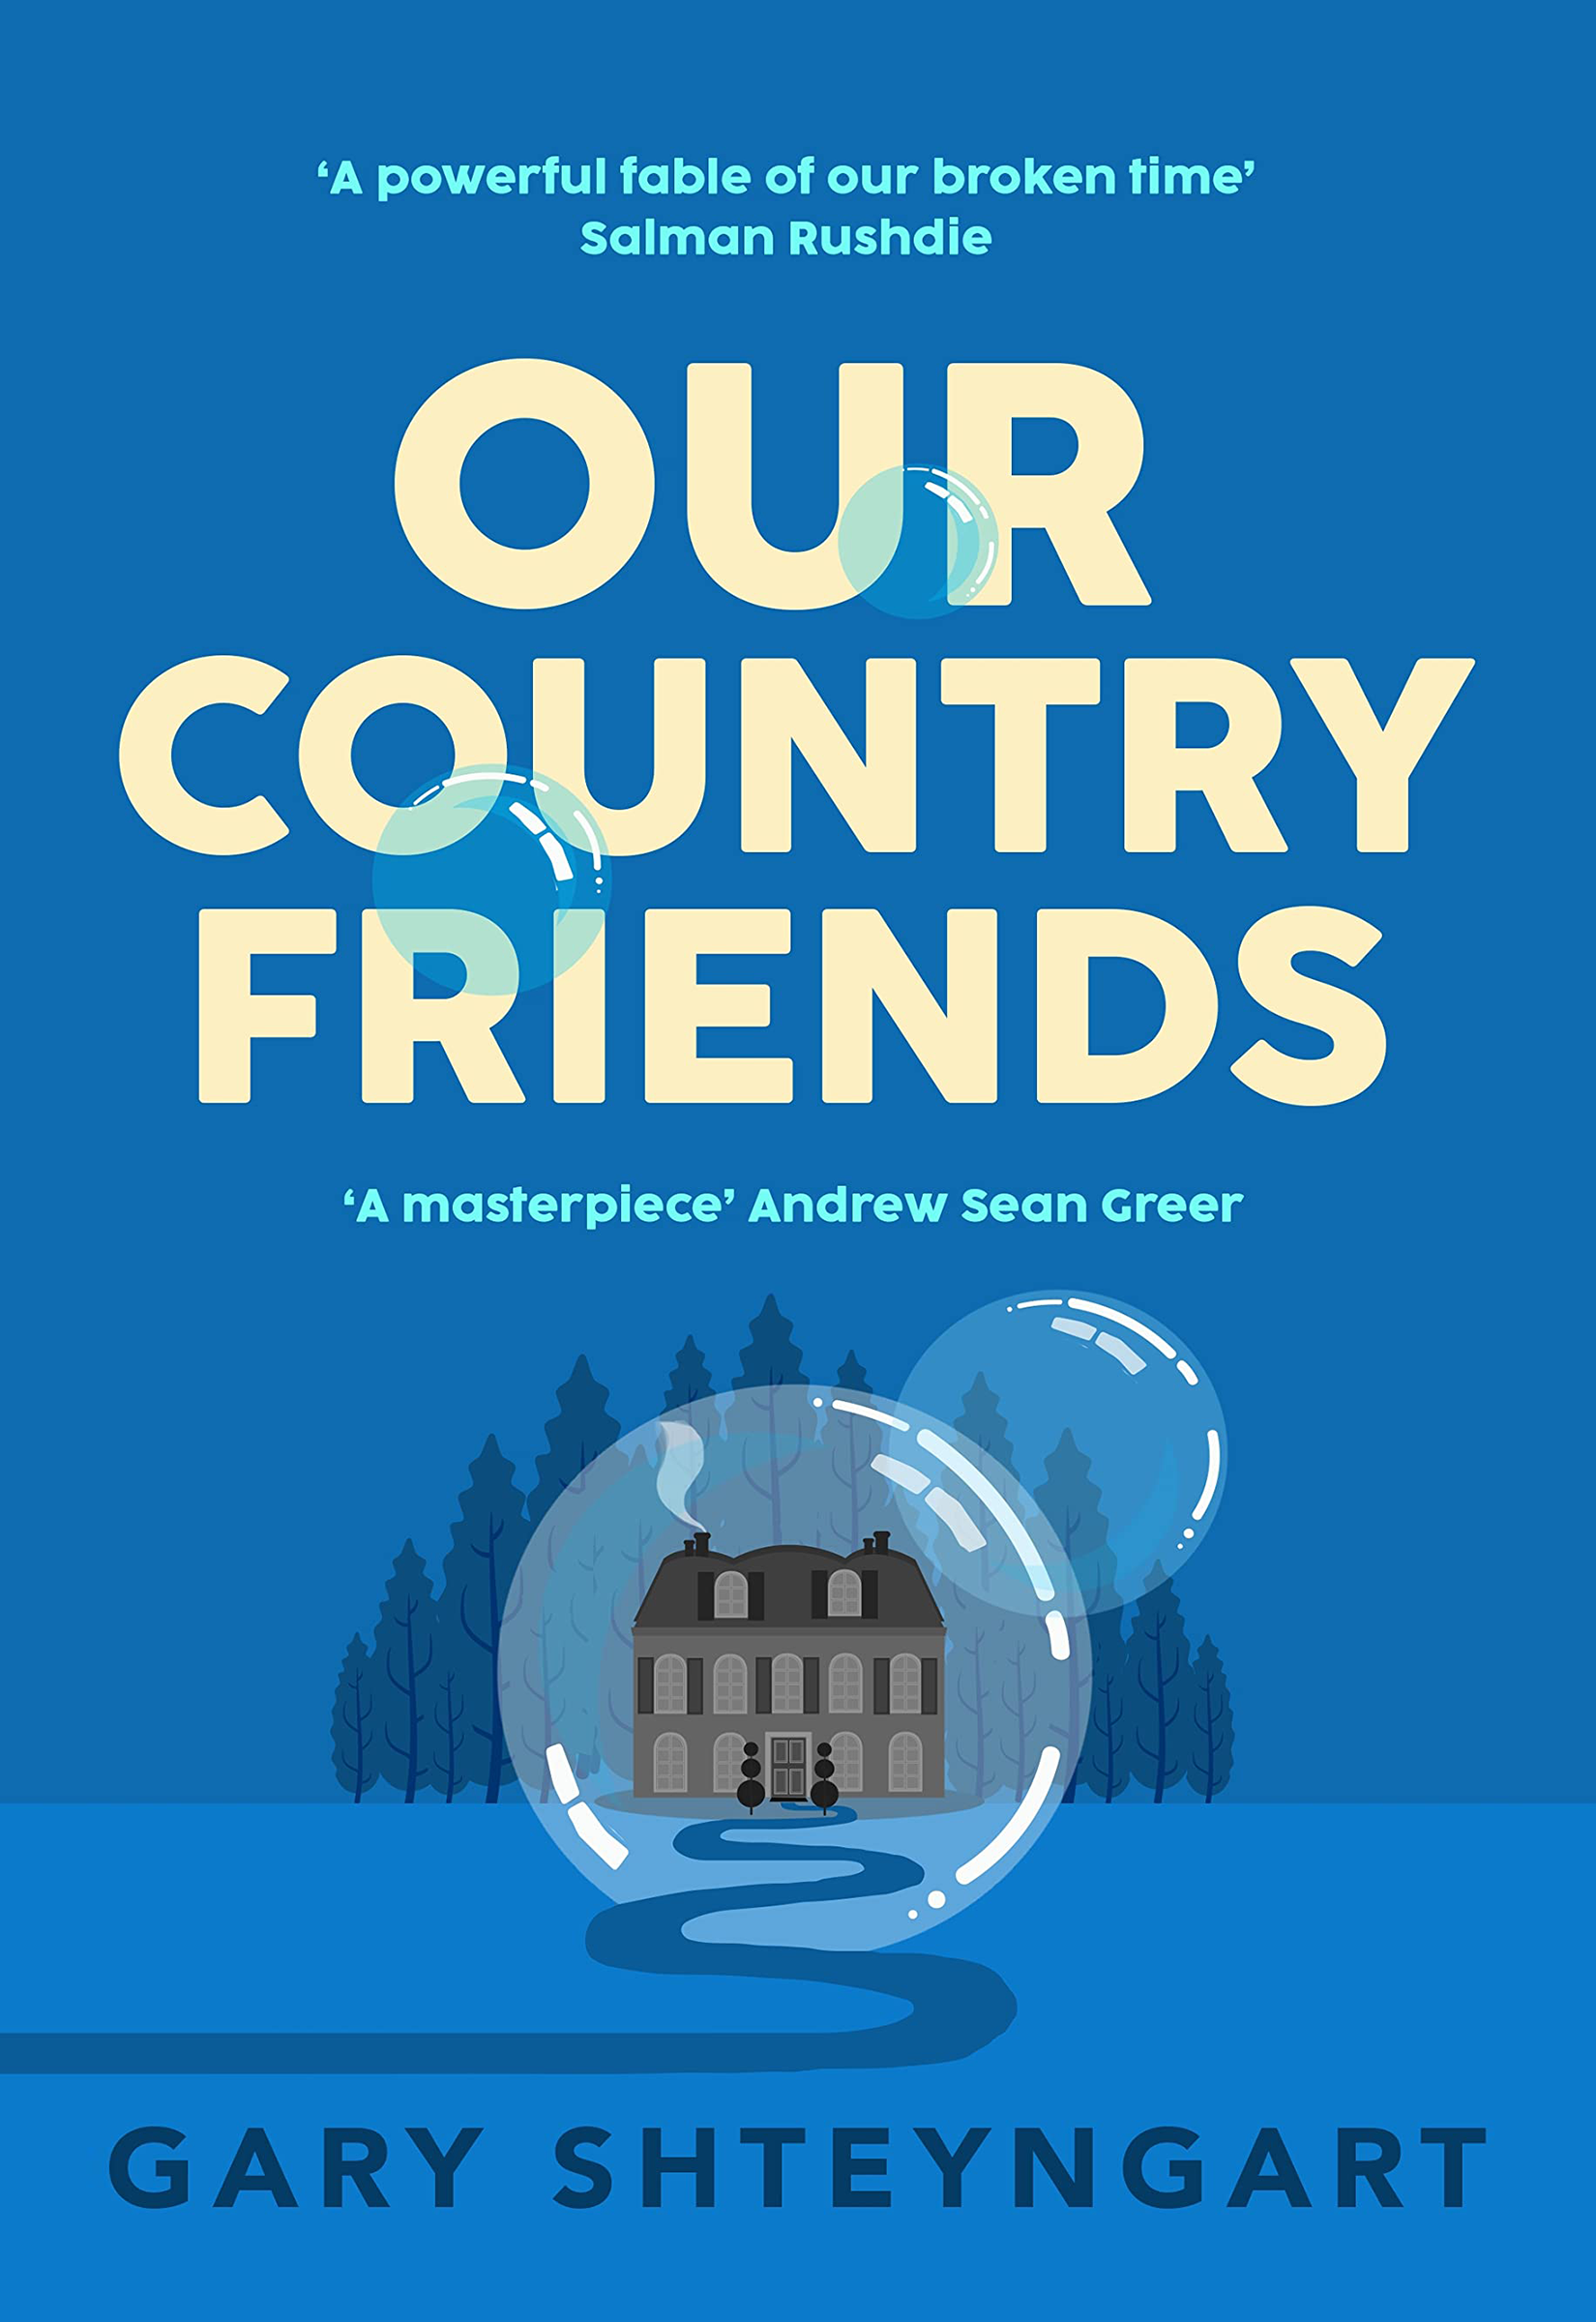 Our Country Friends by Gary Shteyngart - Bookshelf.pk Pakistan